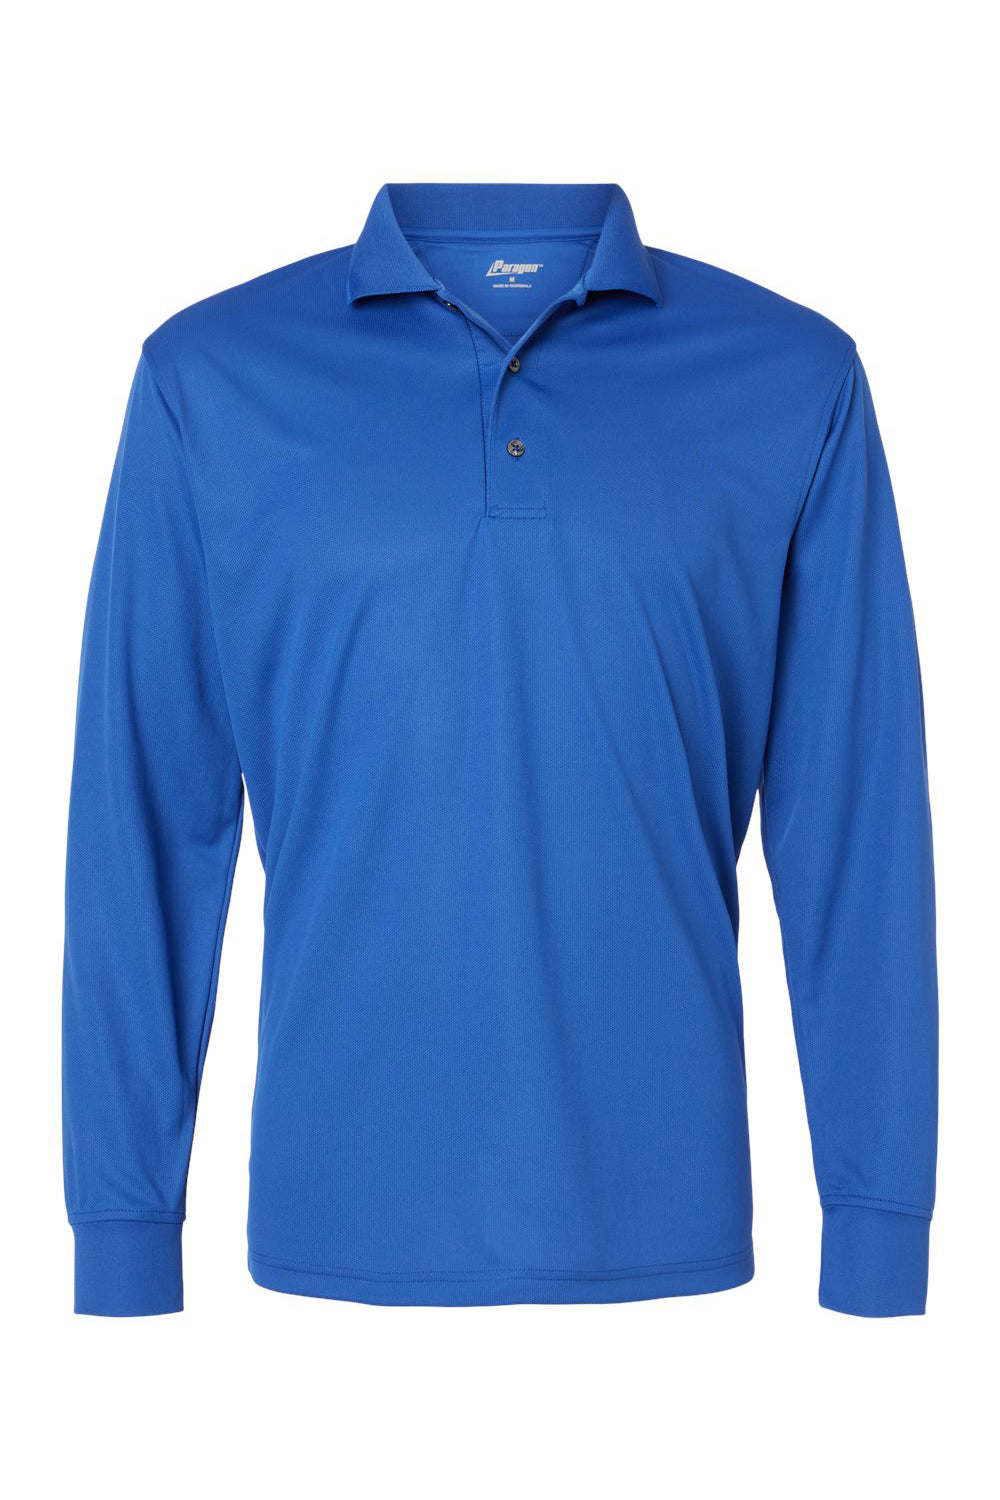 Paragon 110 Mens Prescott Long Sleeve Polo Shirt Royal Blue Flat Front